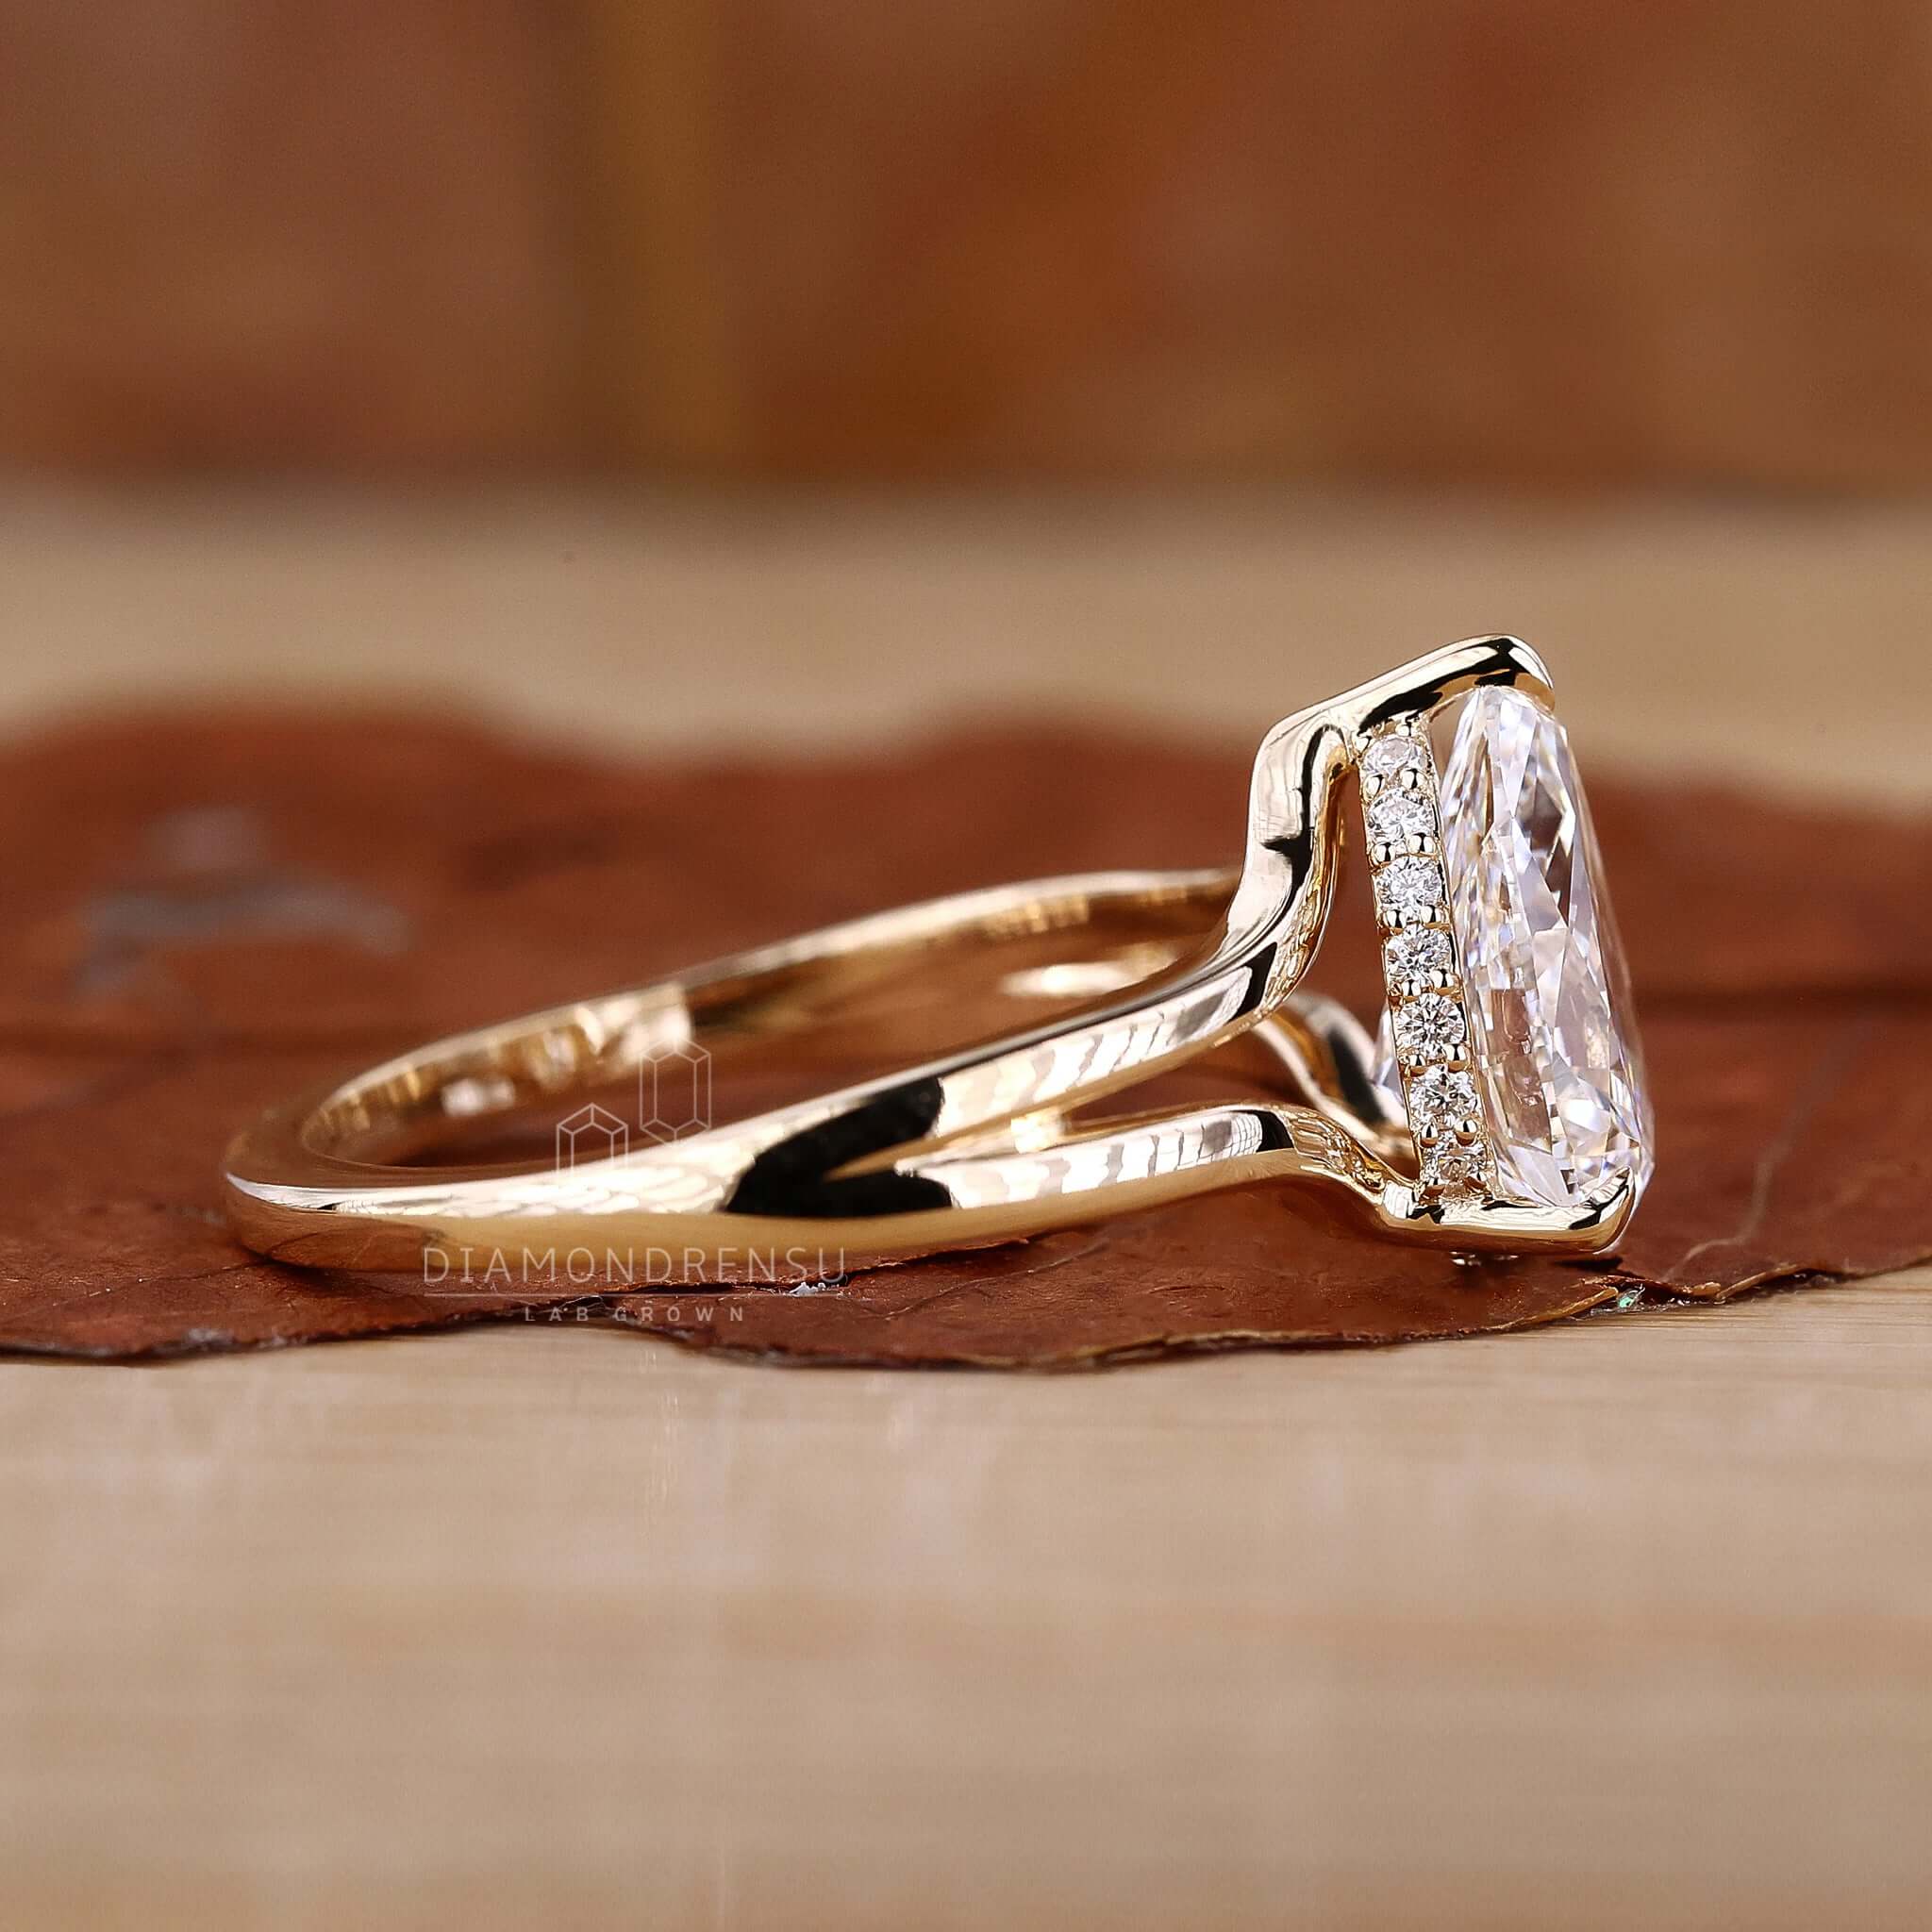 A unique Custom Engagement Ring designed by Diamondrensu.